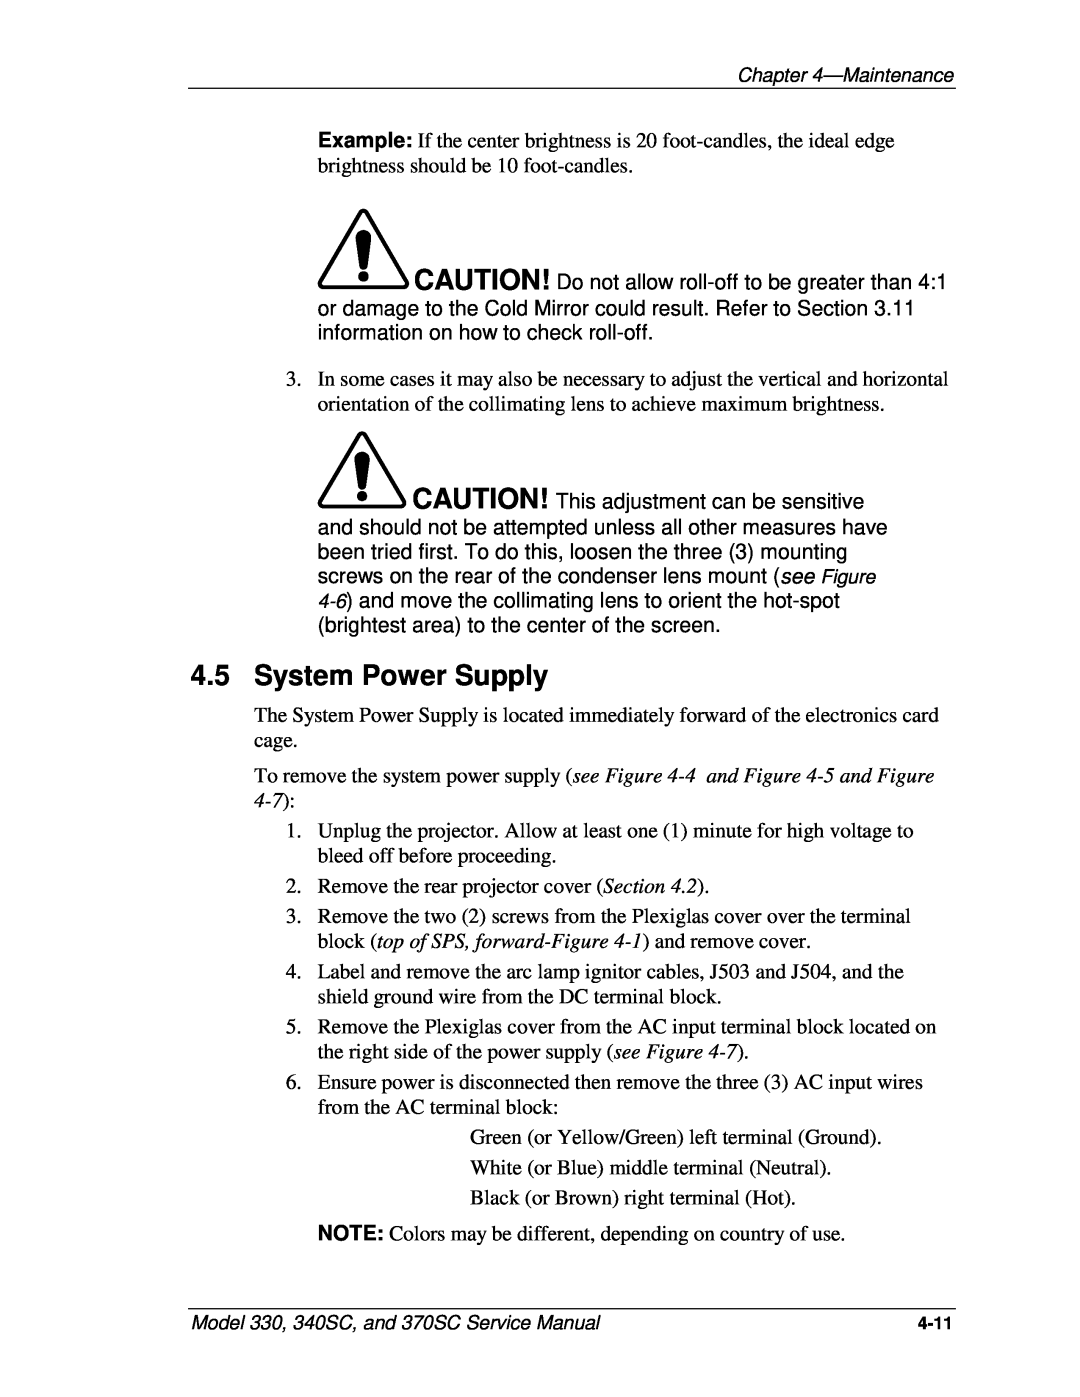 JVC 370 SC, 330, 340 SC service manual System Power Supply 